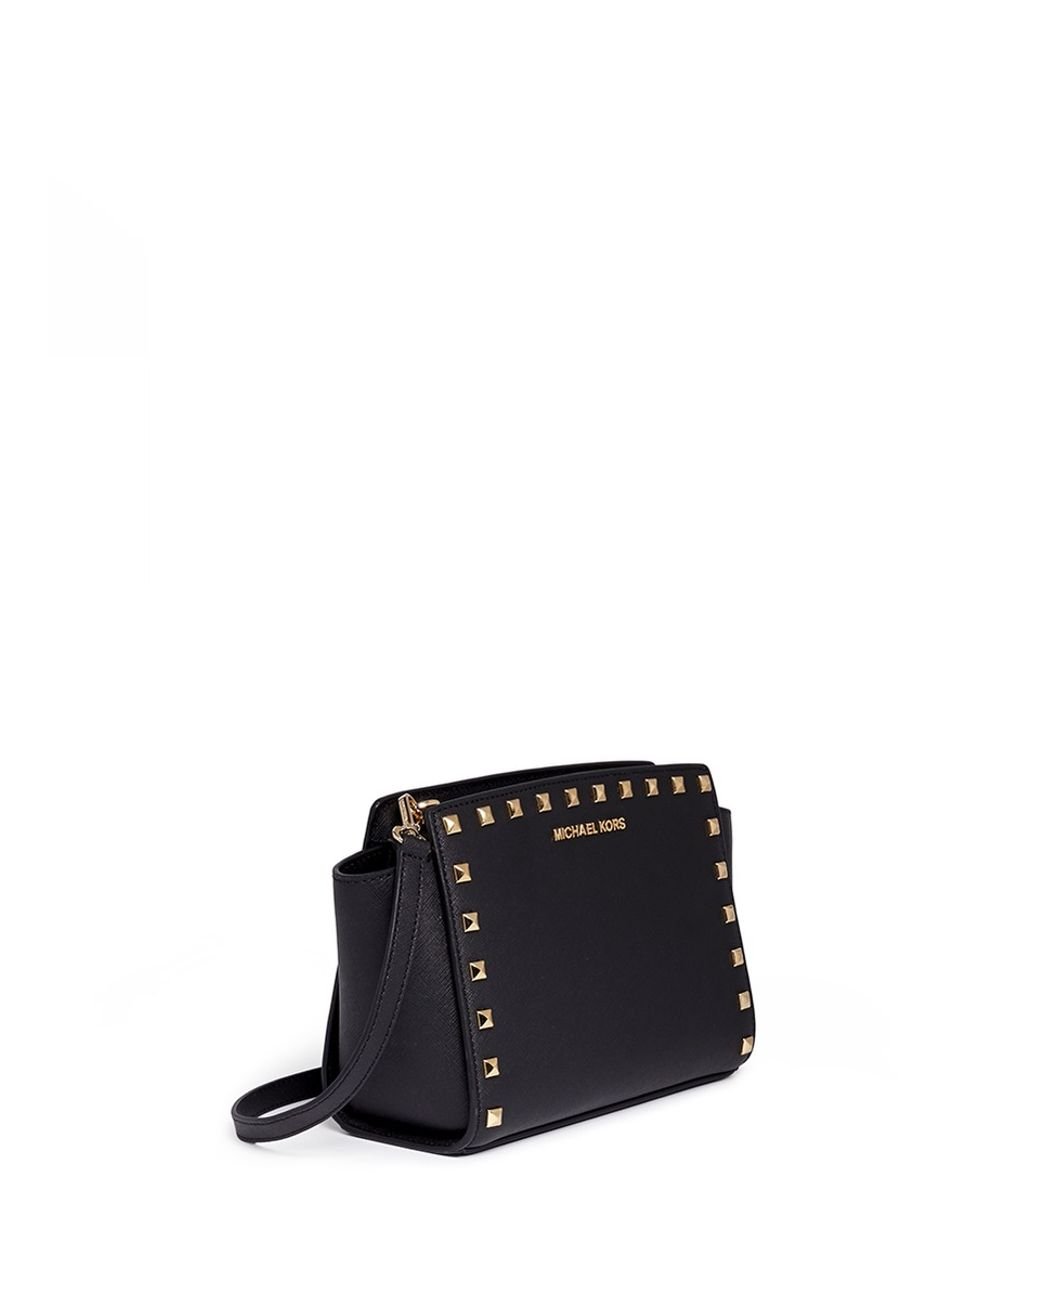 Michael Kors Selma Mini Saffiano Leather Crossbody Bag - Black